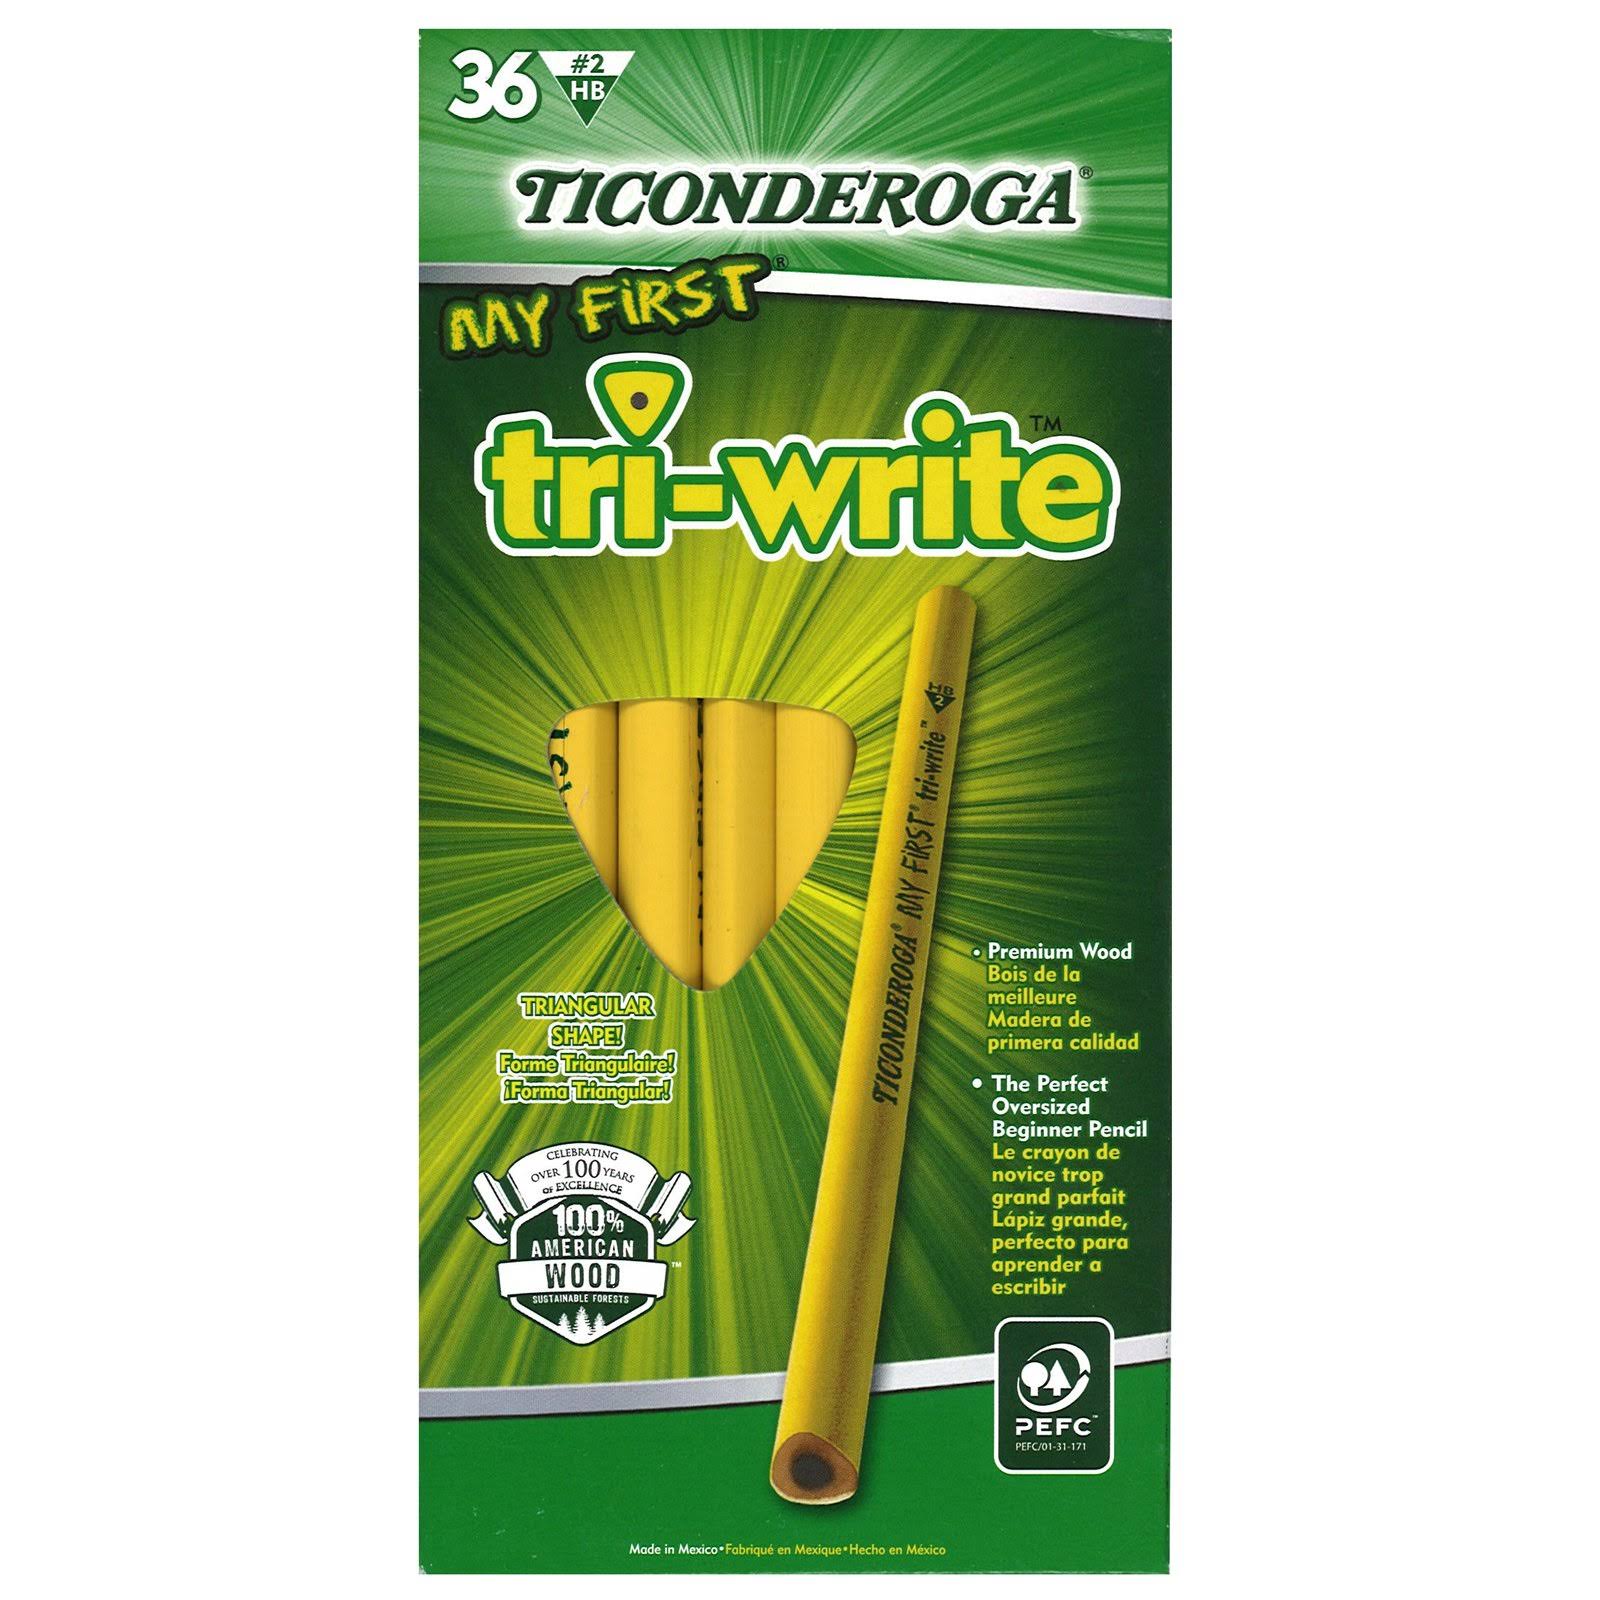 Ticonderoga Wood-Cased My First Tri-Write Pencils - Yellow, #2 HB Soft, 36ct